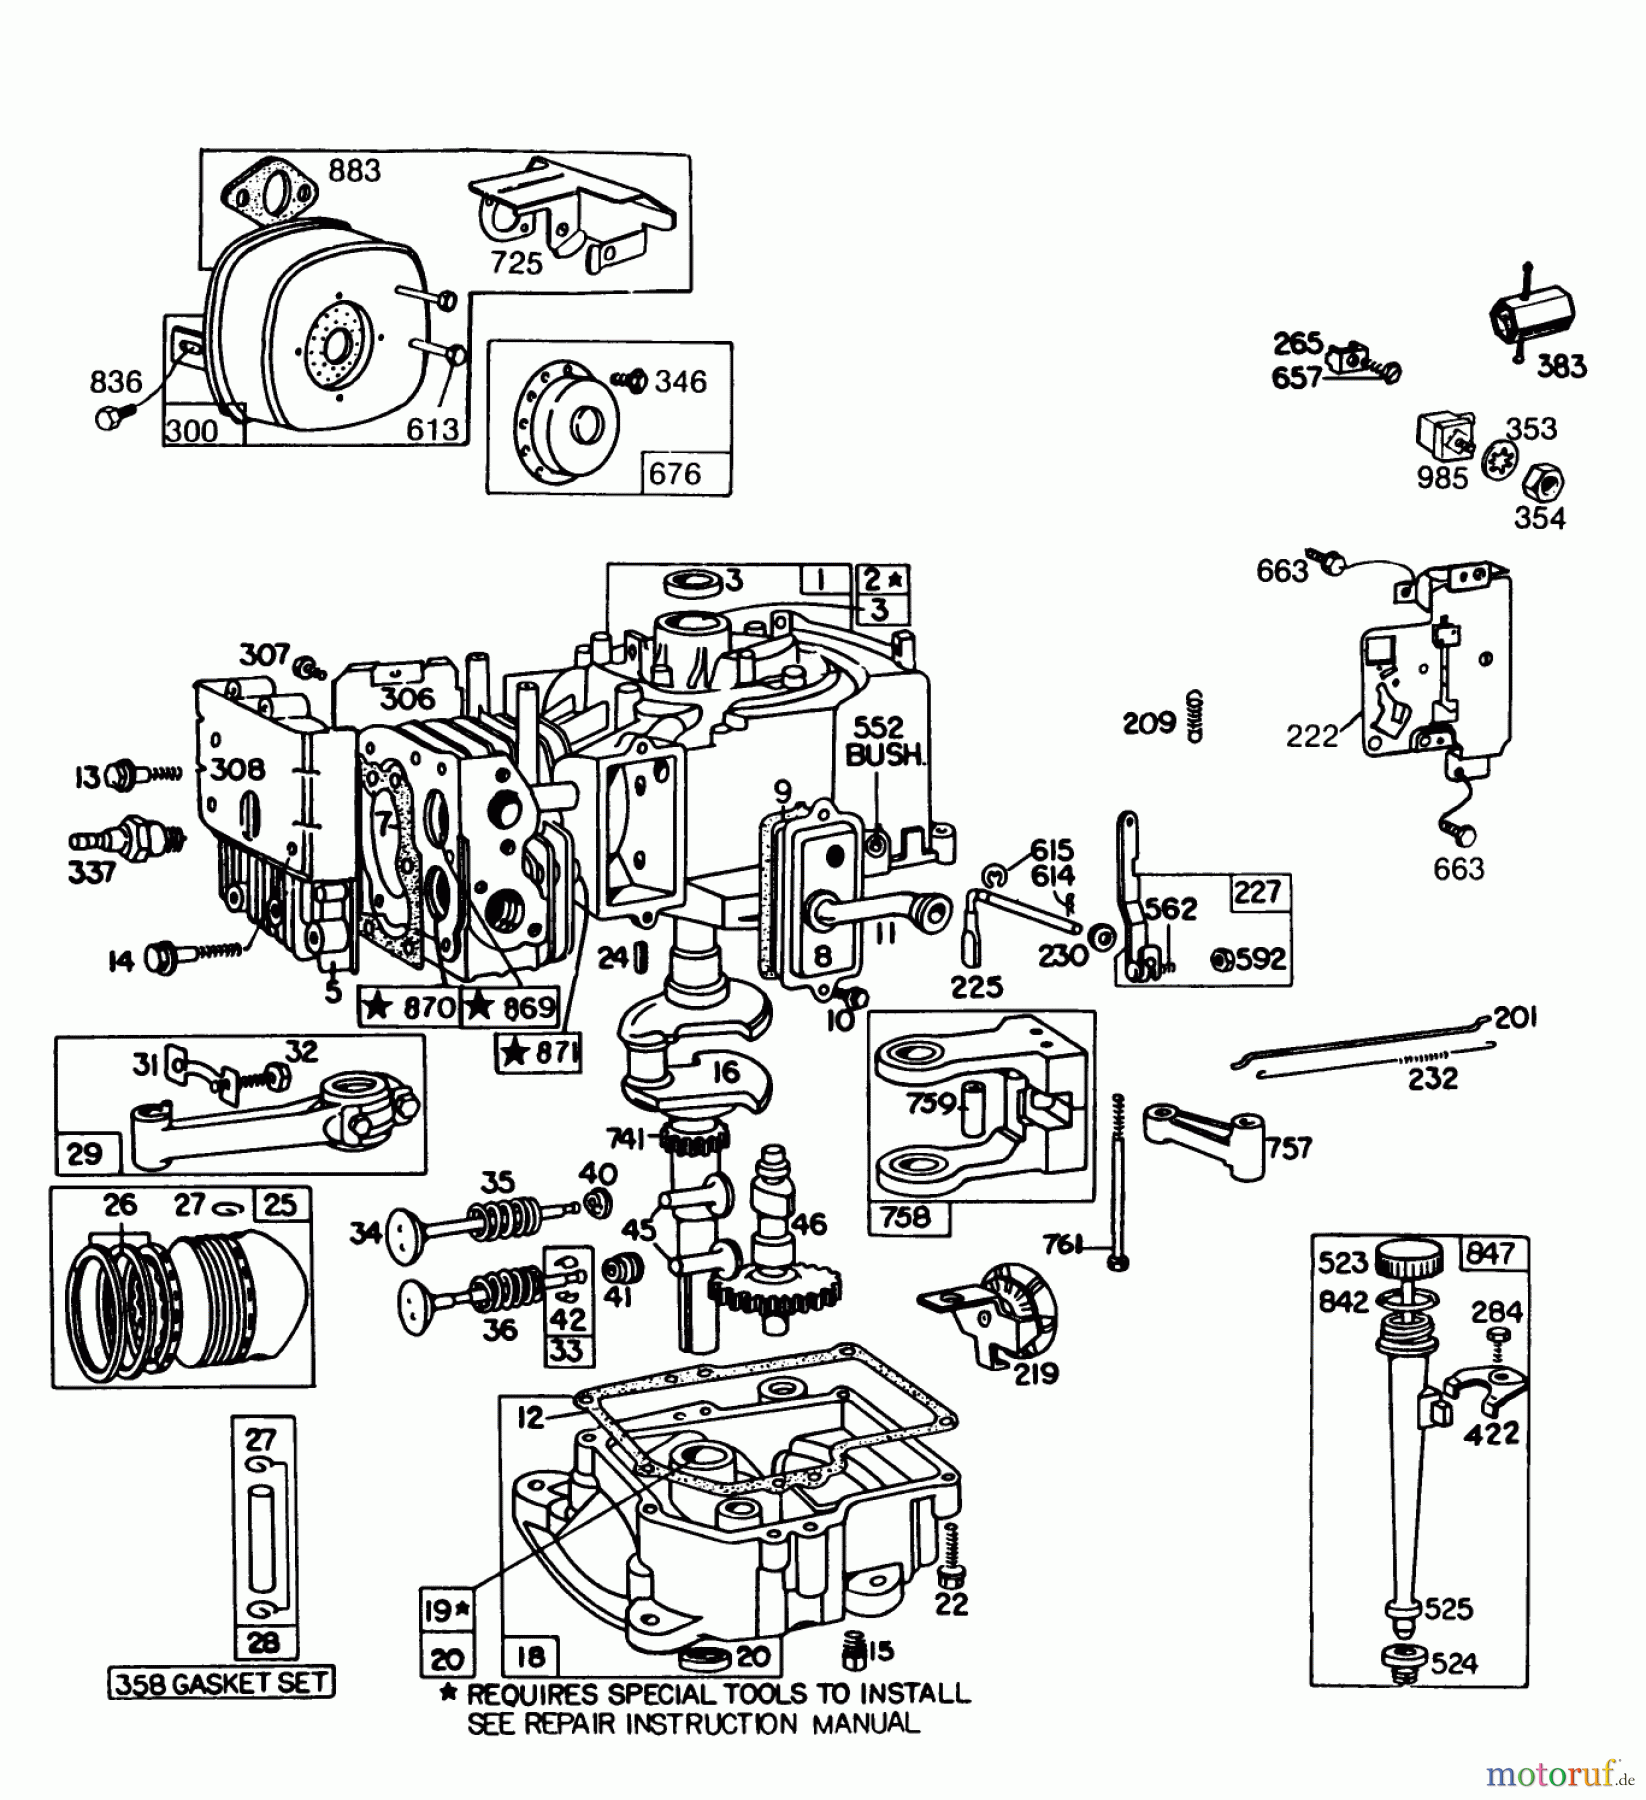  Toro Neu Mowers, Rear-Engine Rider 56138 (8-32) - Toro 8-32 Rear Engine Rider, 1986 (6000001-6999999) ENGINE BRIGGS & STRATTON MODEL NO. 191702-2160-01 8 H.P. REAR ENGINE RIDER RECOIL MODEL 56138 #2